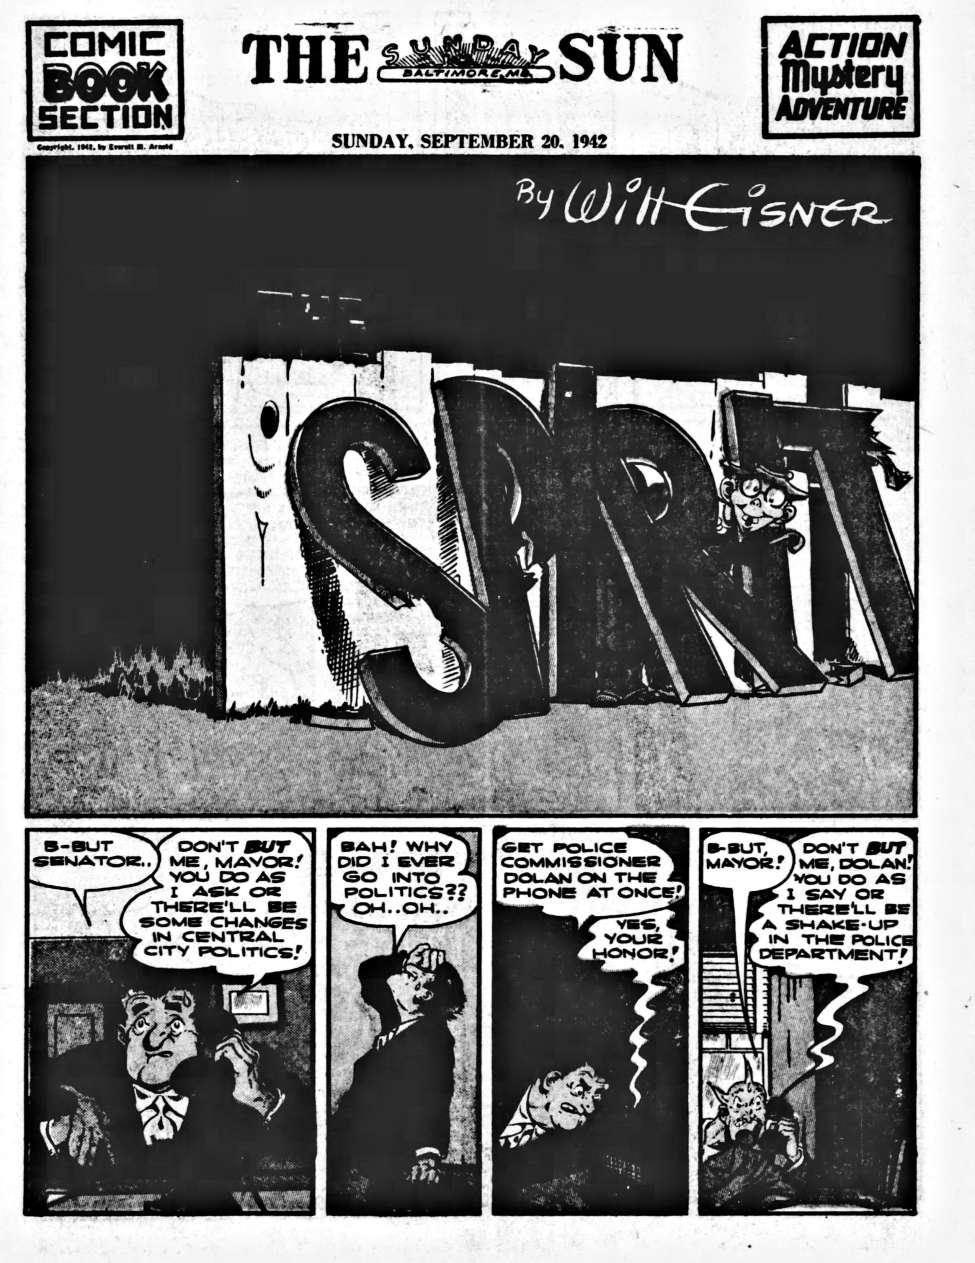 Comic Book Cover For The Spirit (1942-09-20) - Baltimore Sun (b/w)